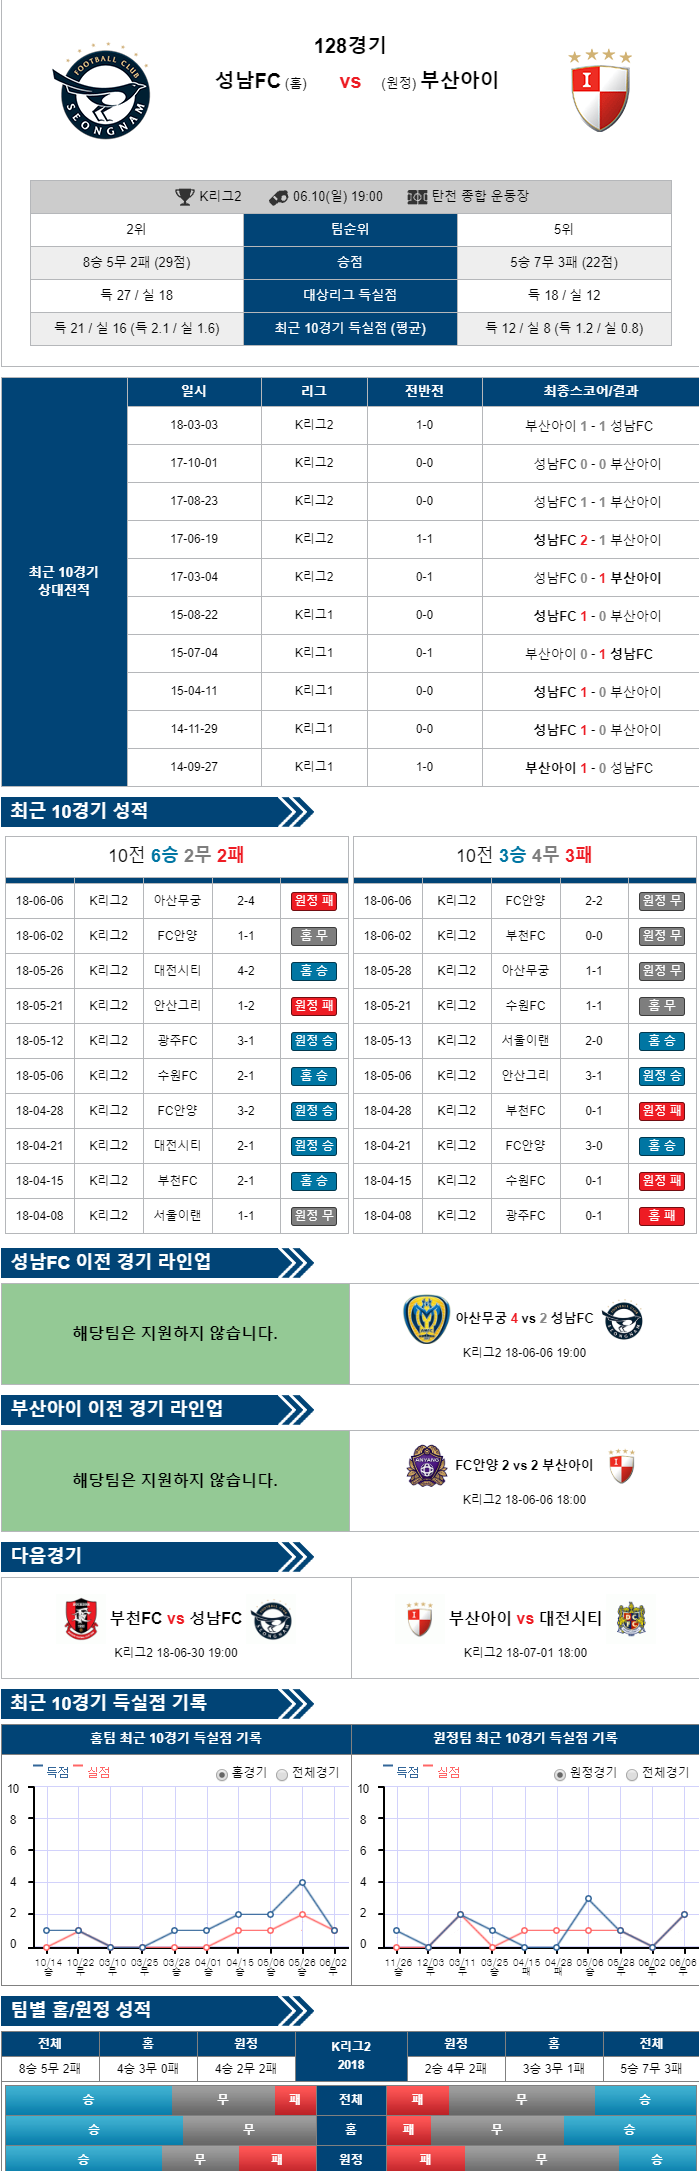 06-10 [K2리그] 18:00 축구분석 성남FC vs 부산아이파크